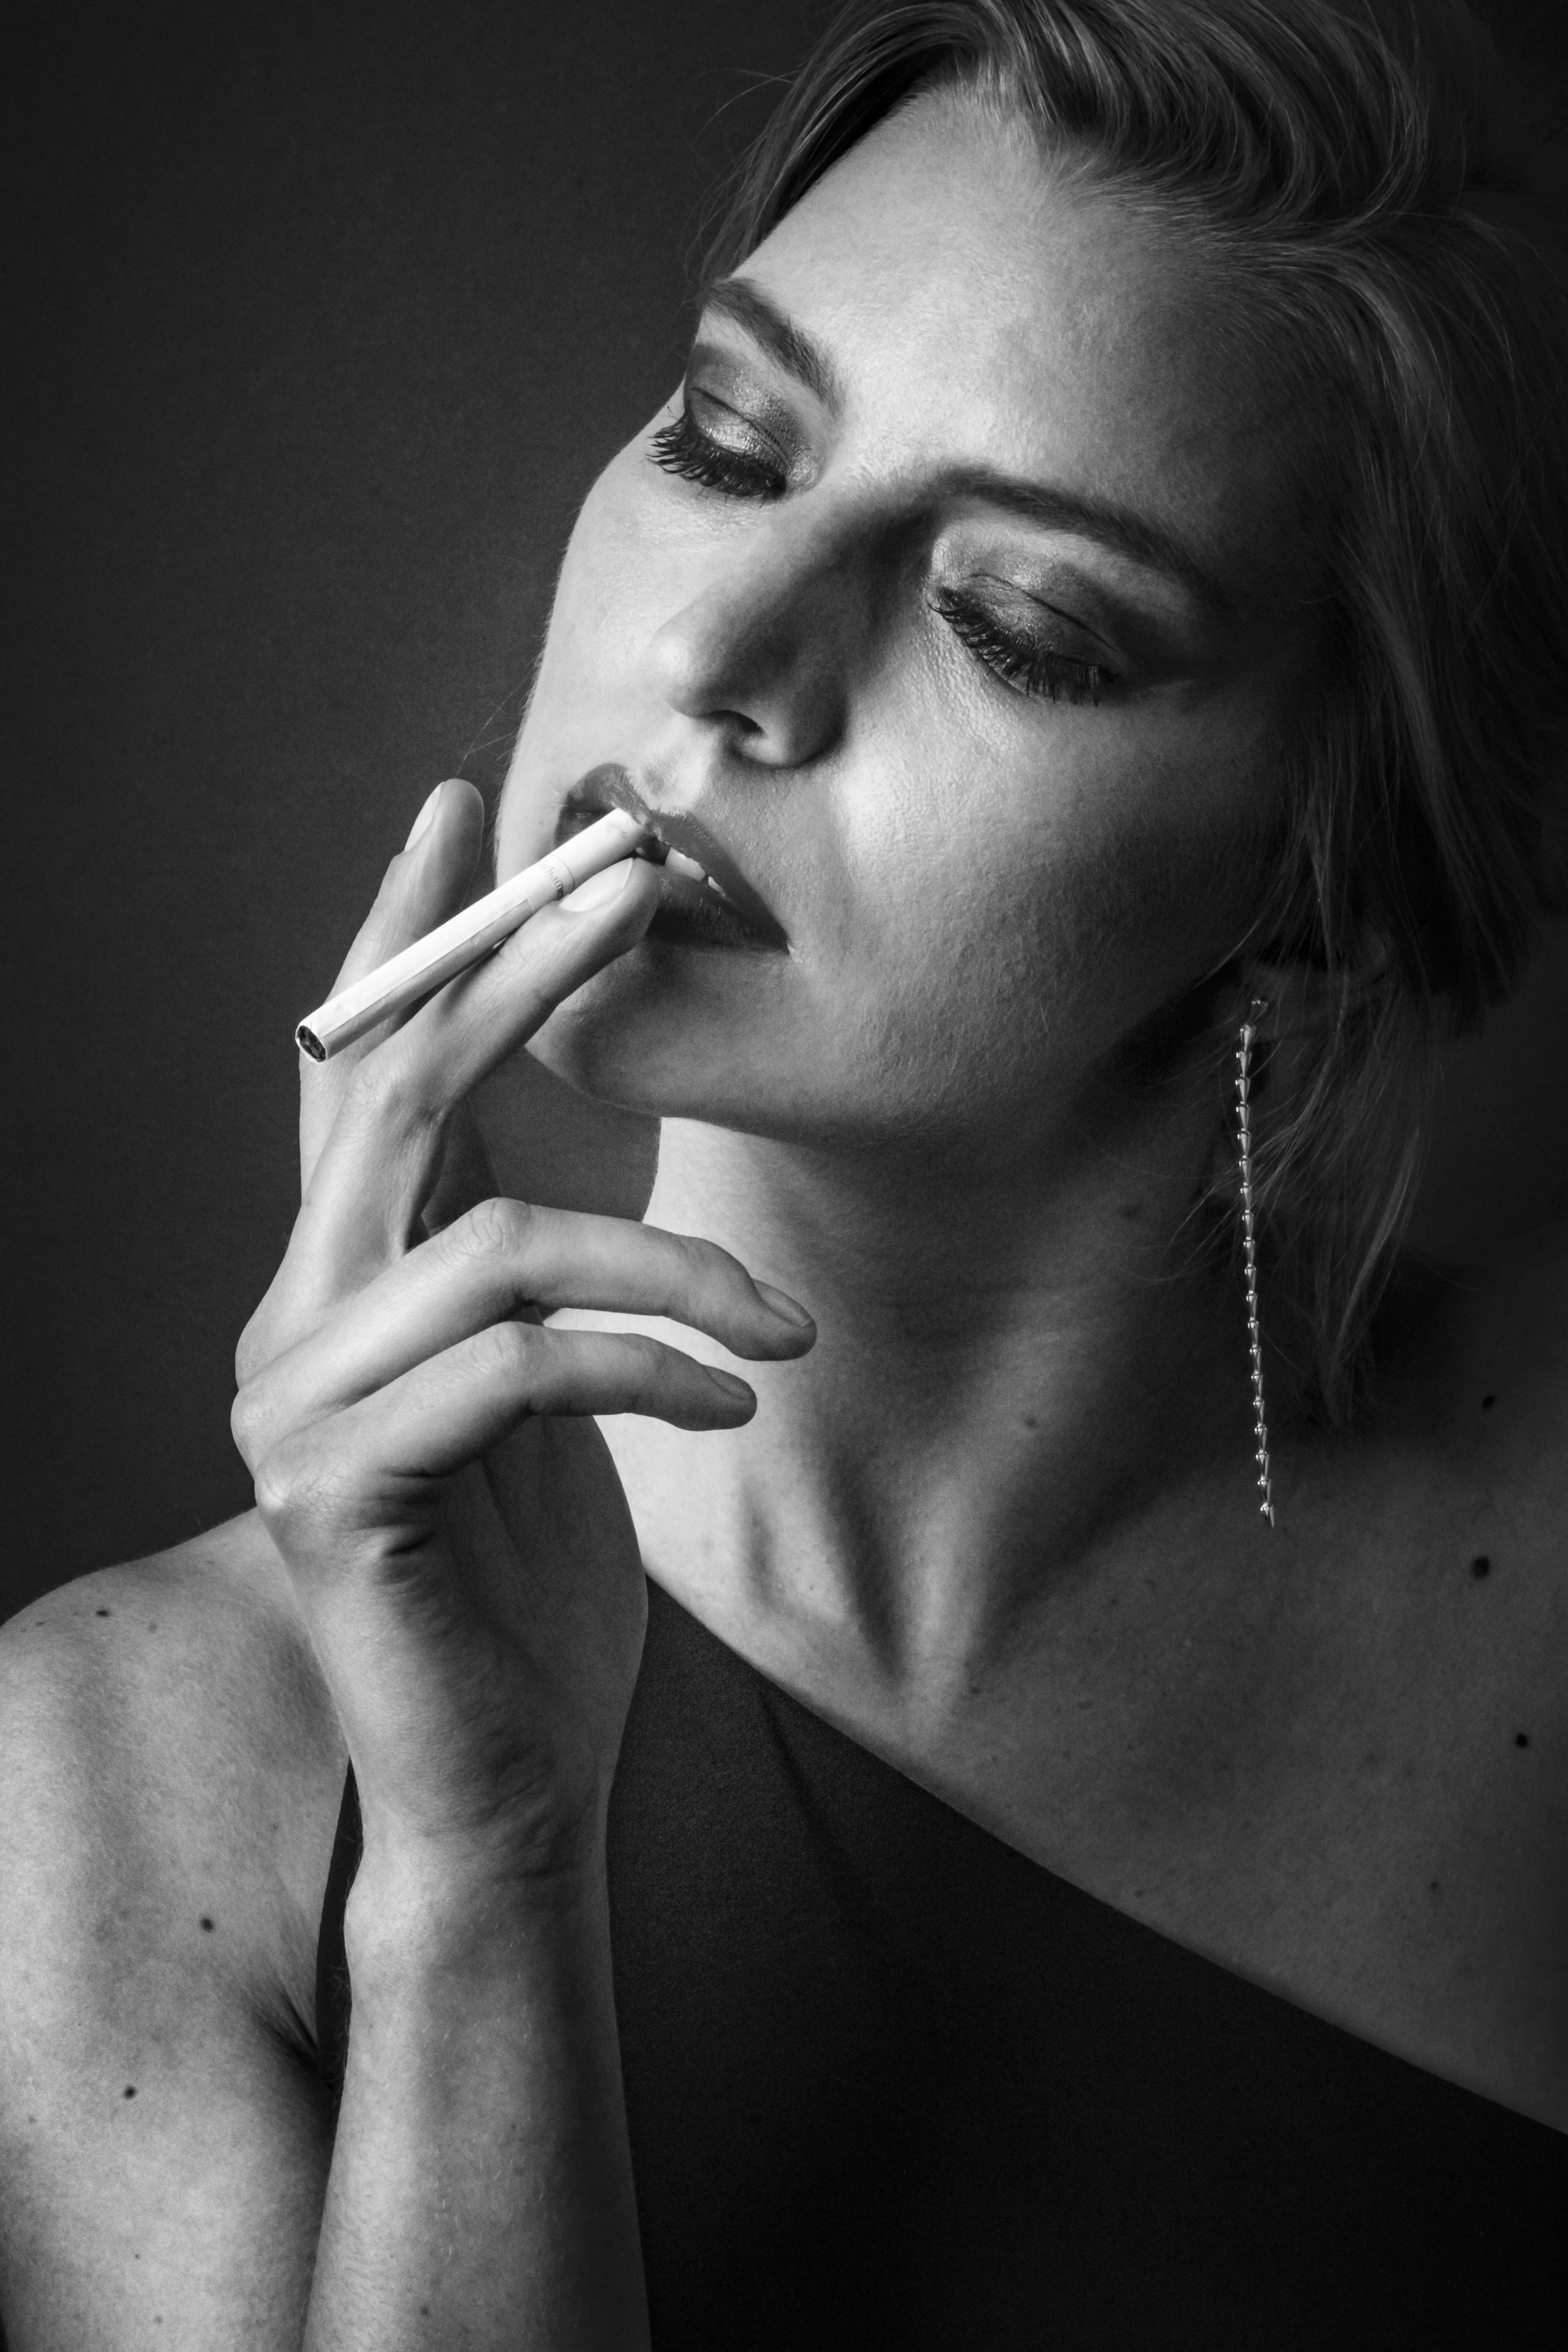 Untitled_Woman w cigarette_2.jpg